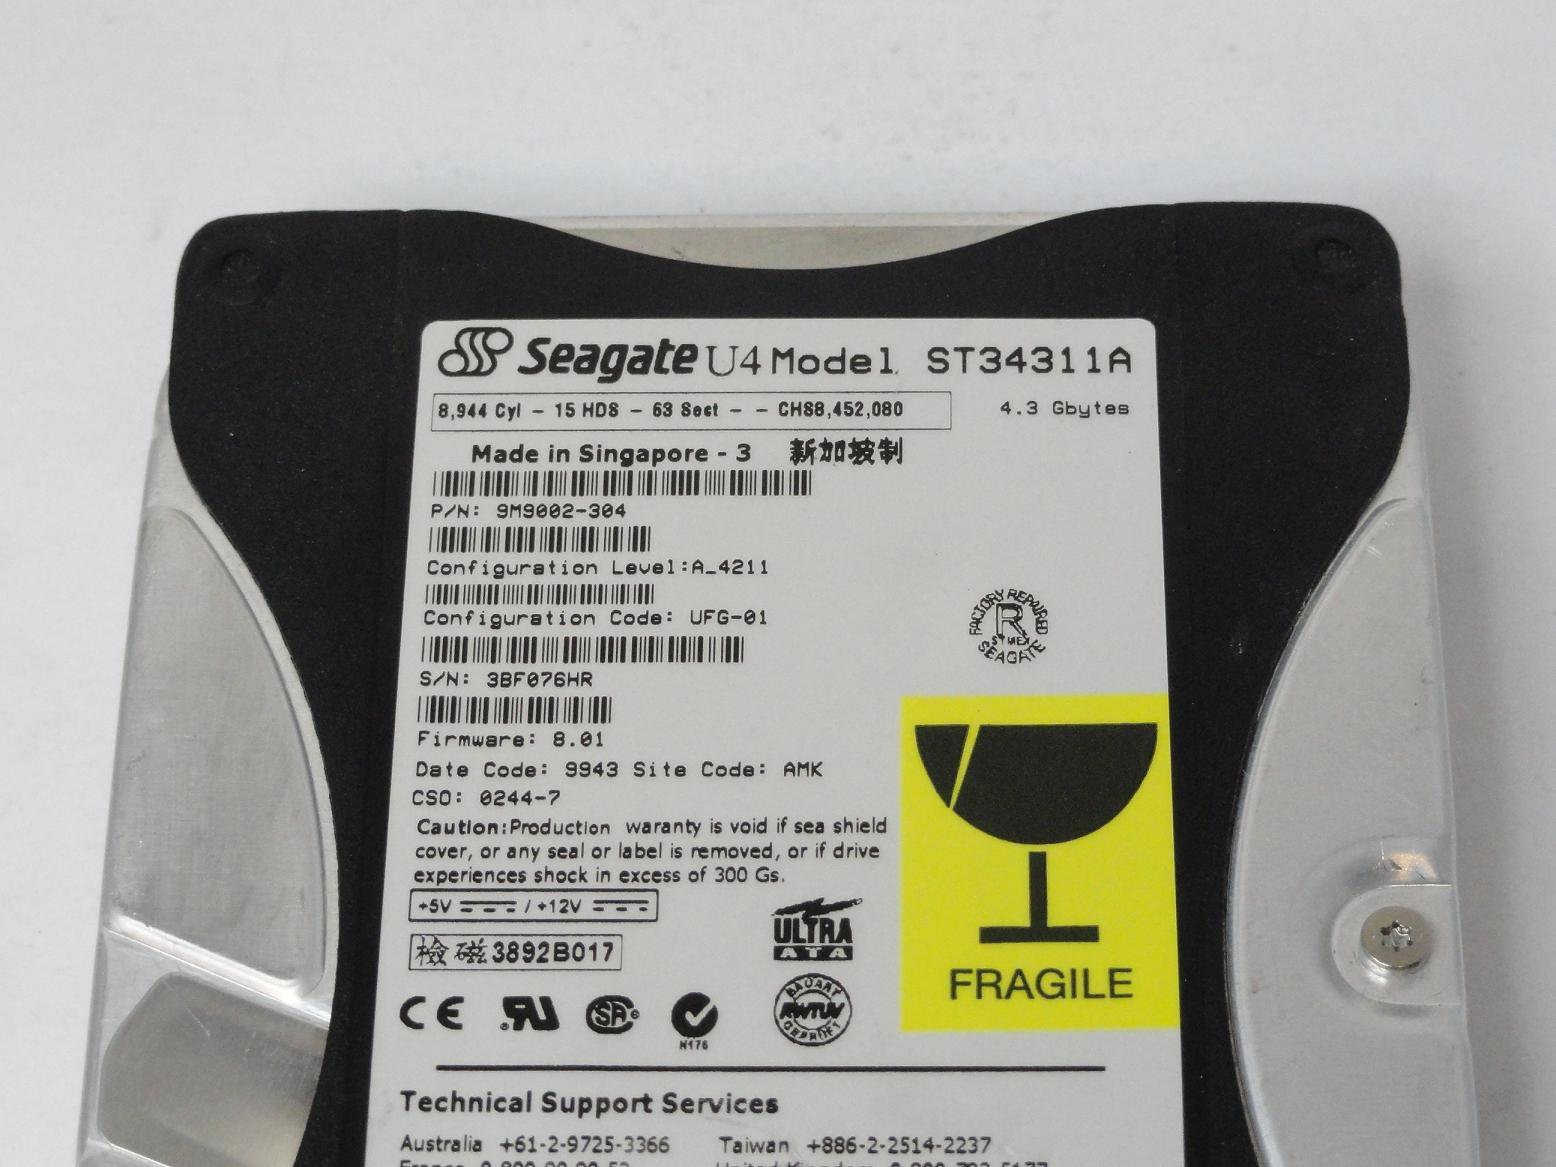 MC5554_9M9002-304_Seagate 4.3GB 5400rpm 3.5in Recertified HDD - Image3